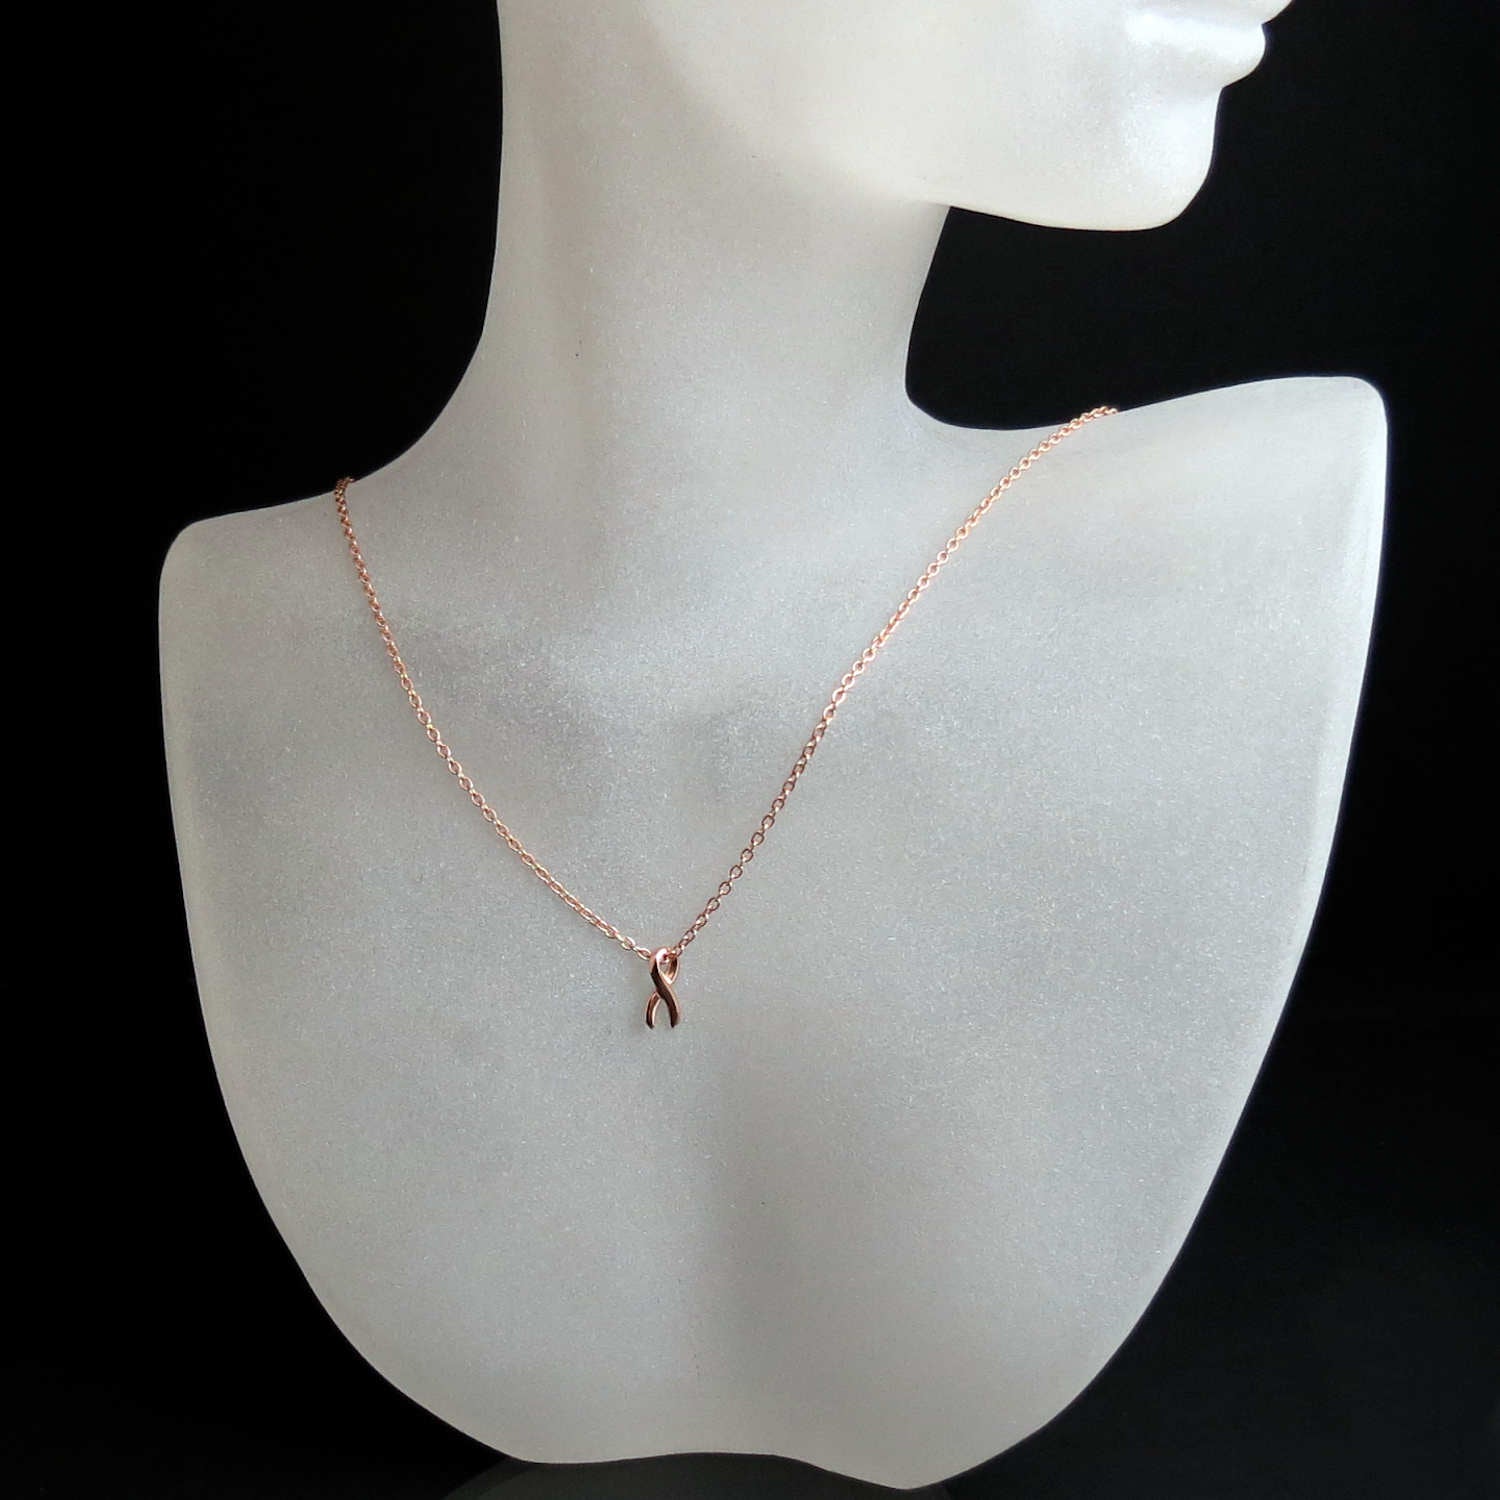 Cancer Survivor Jewelry Breast Cancer Survivor Necklace Gifts For Women  Necklace | eBay